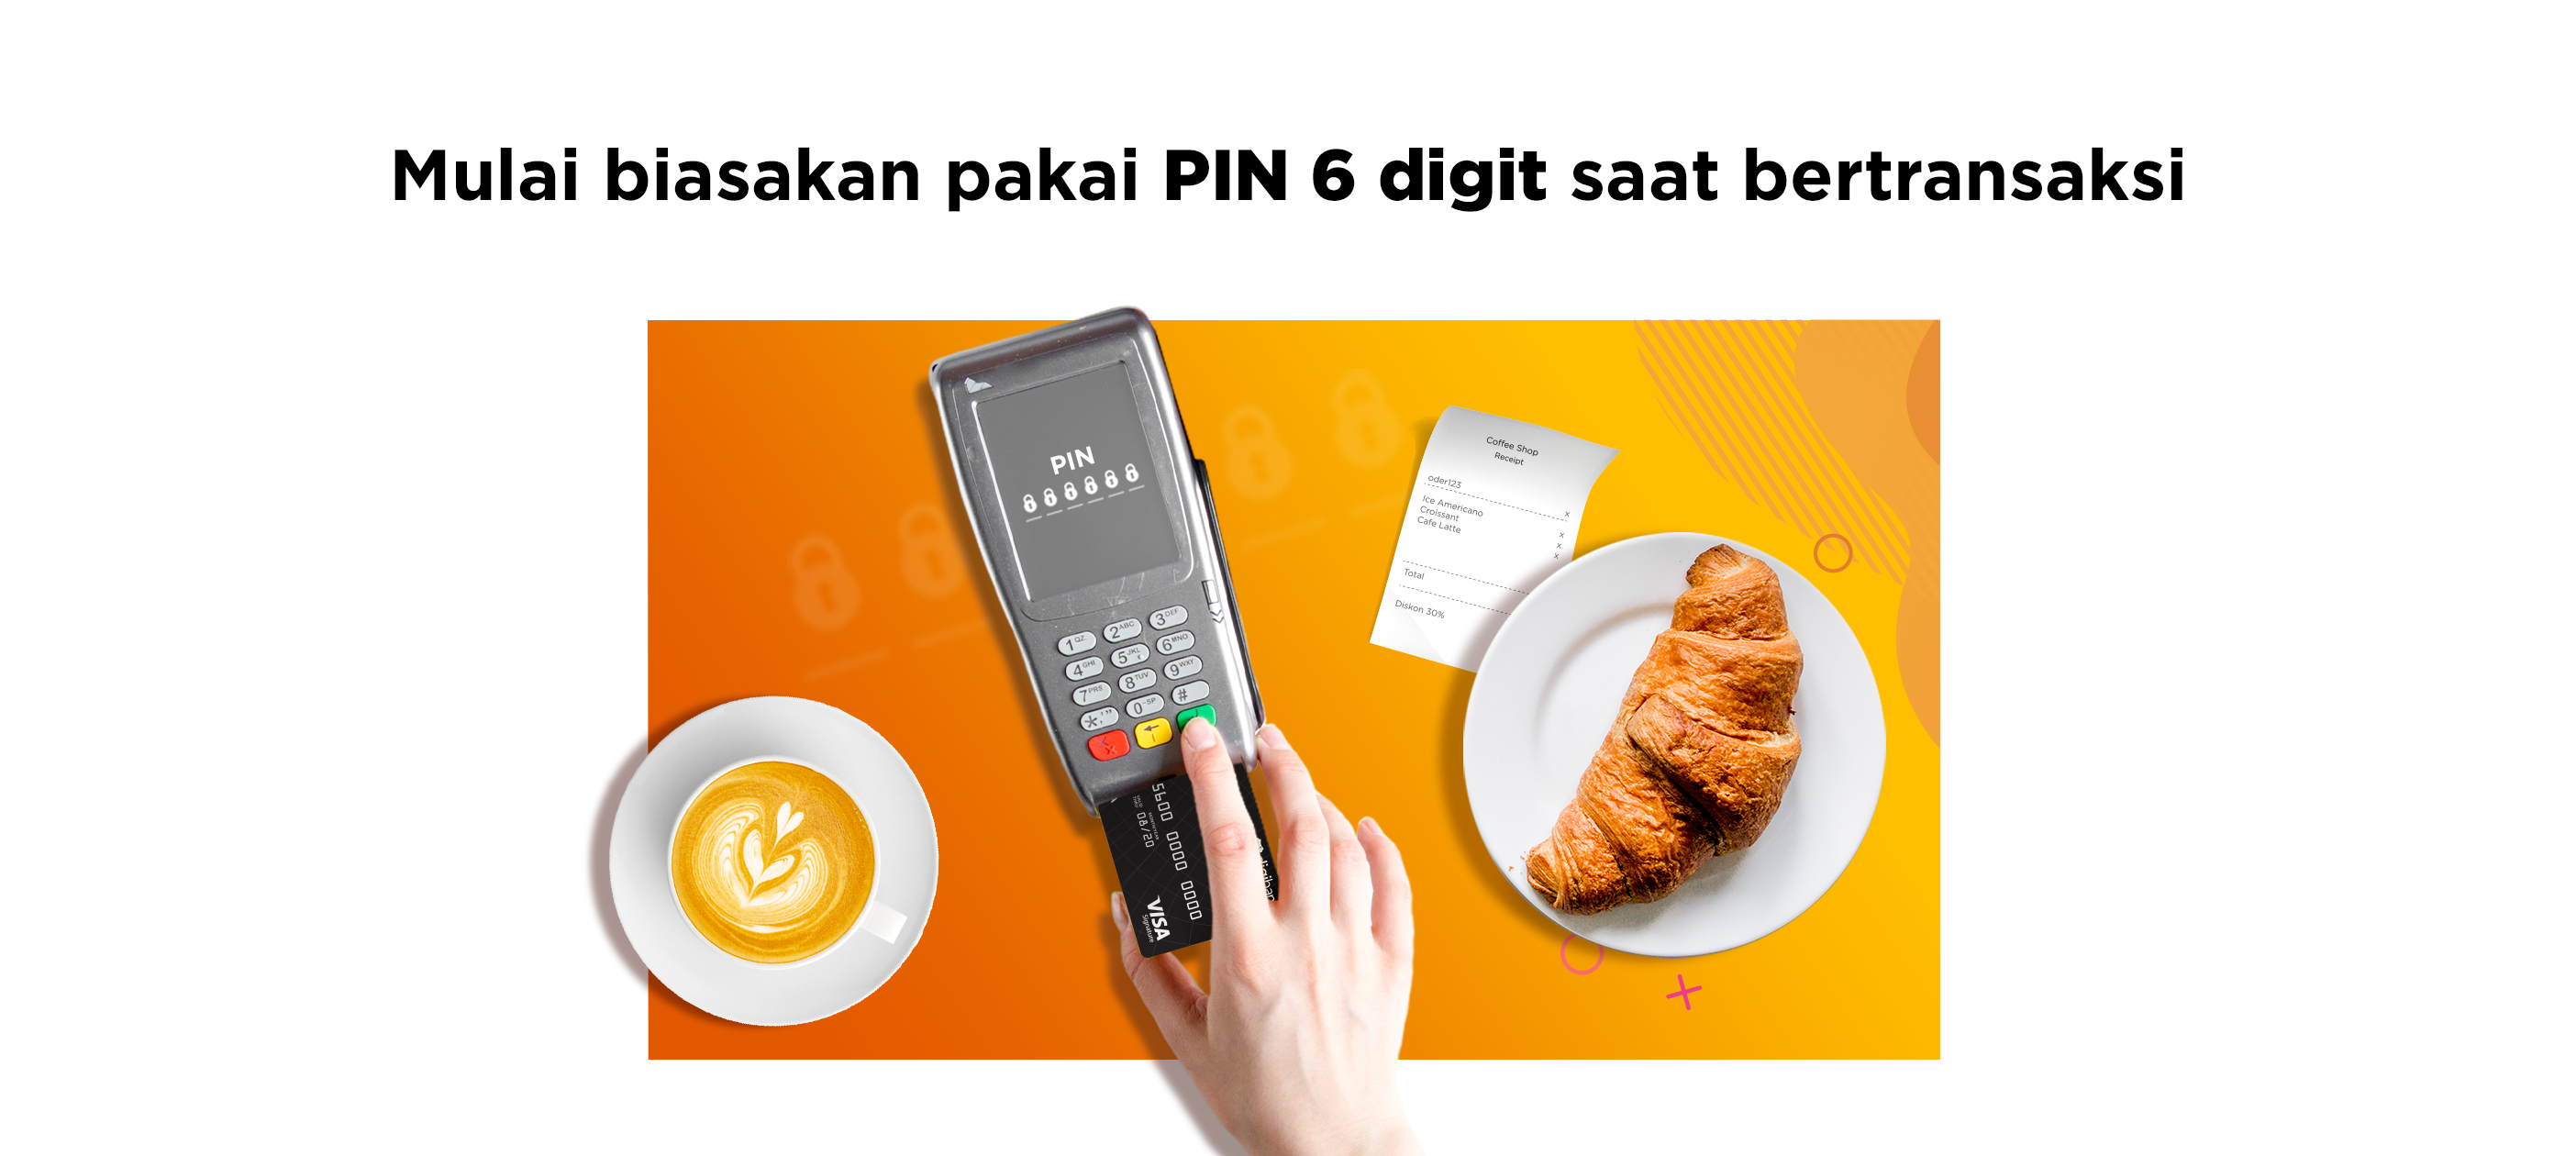 Buat/Ubah PIN via Aplikasi digibank by DBS / Internet Banking digibank